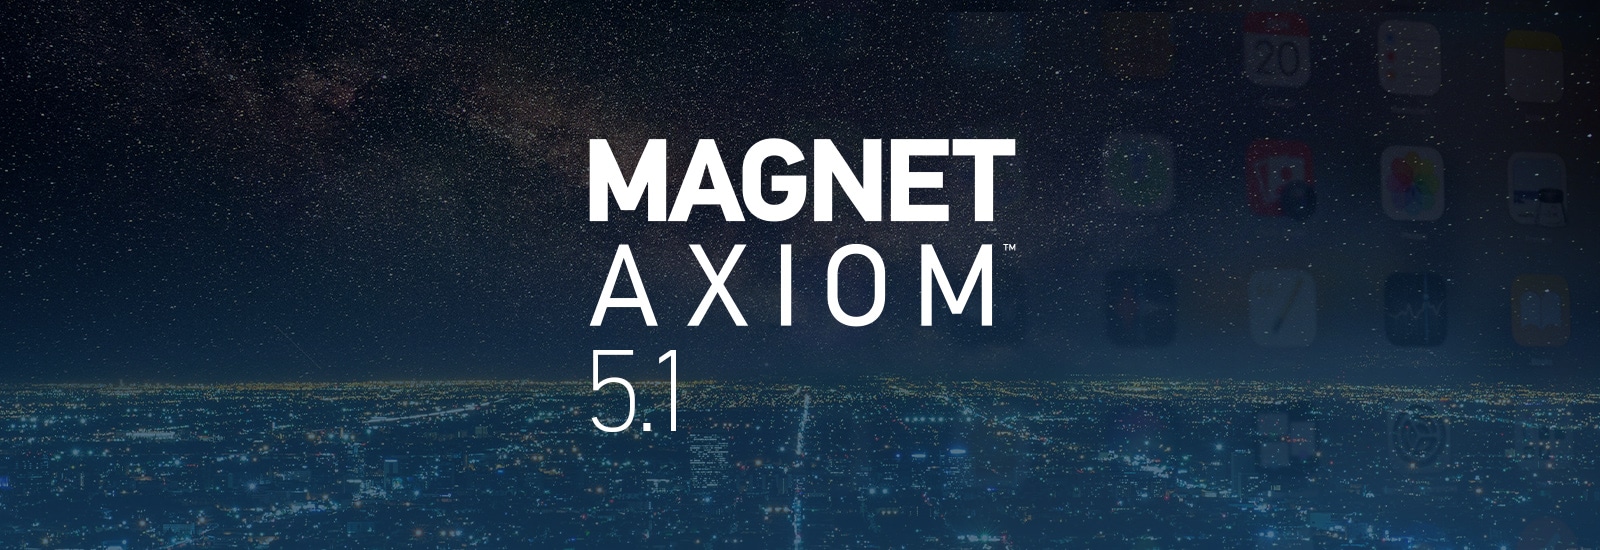 Magnet AXIOM 5.1